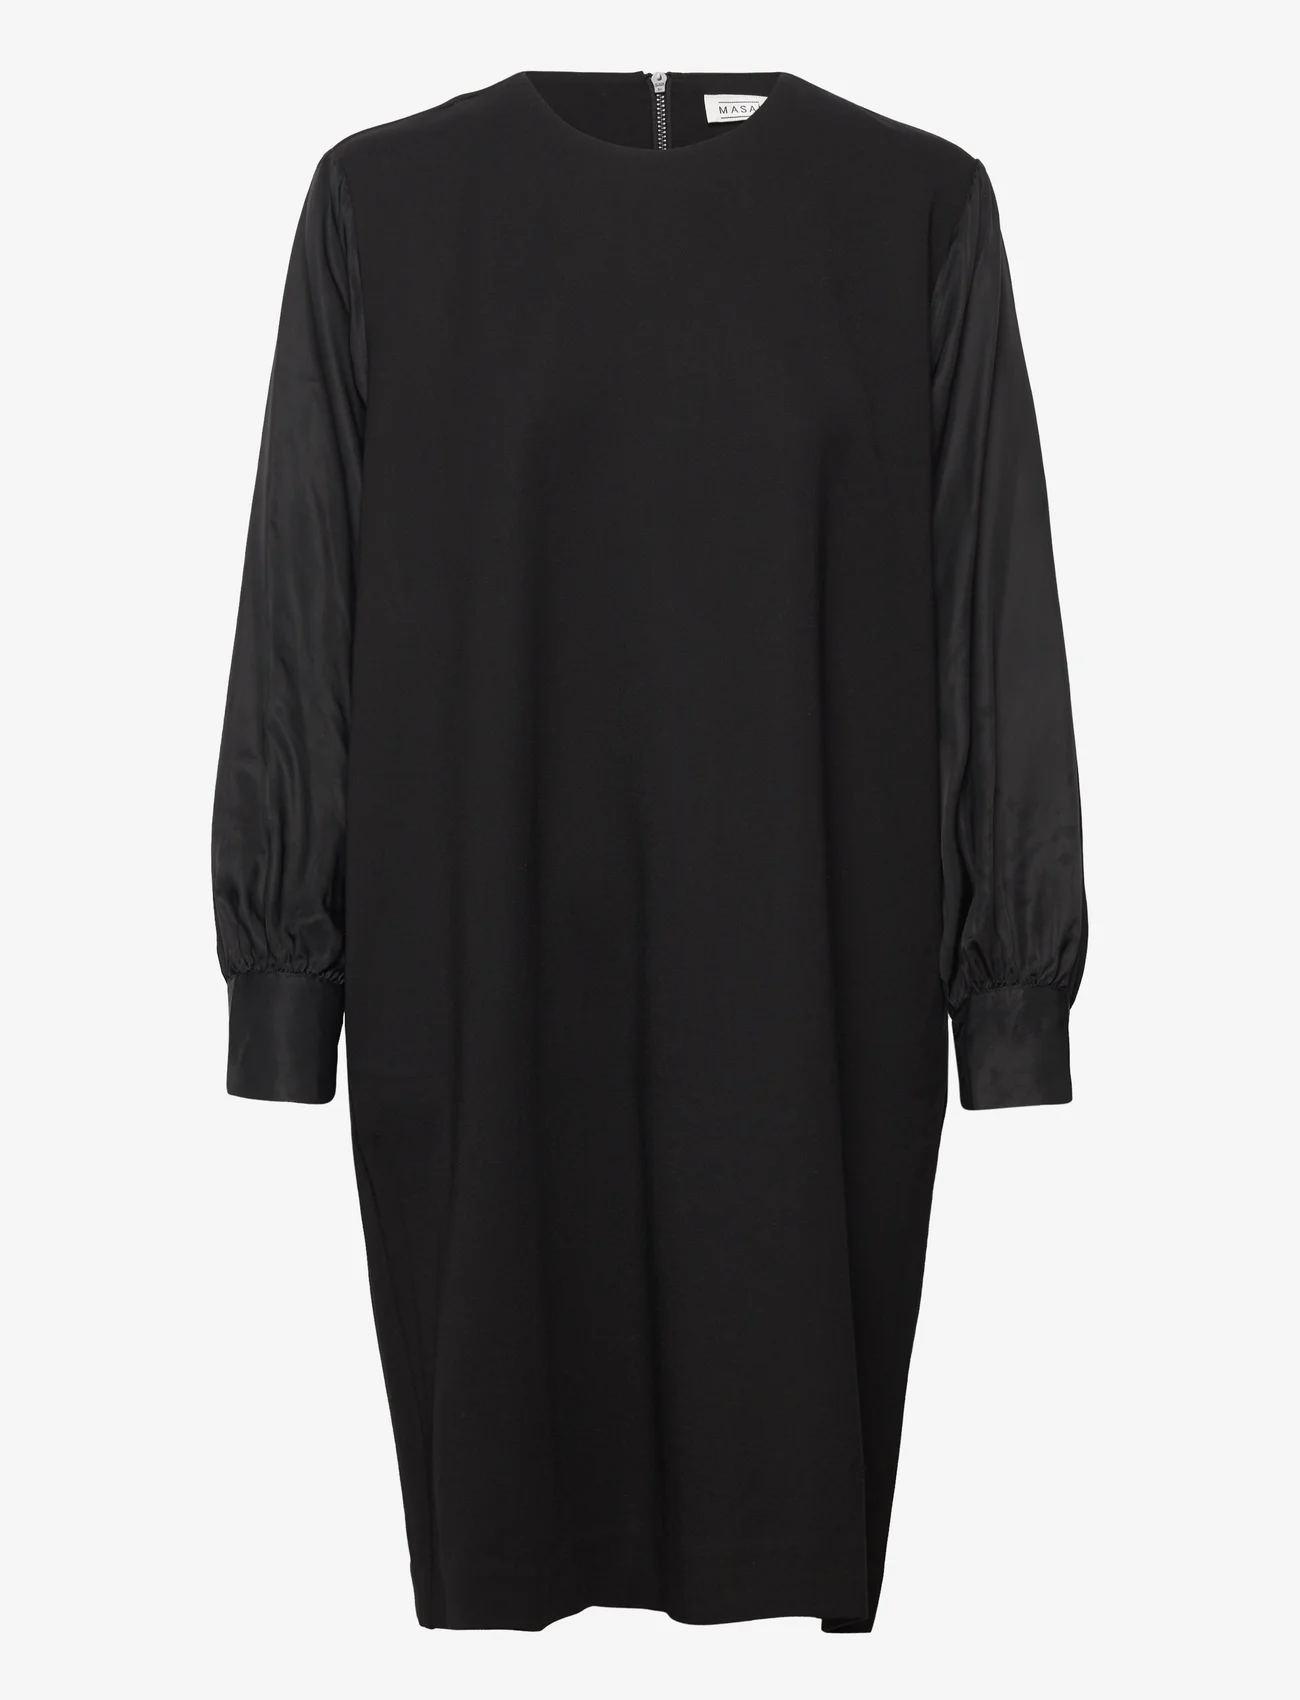 Masai - Nicolina - short dresses - black - 0